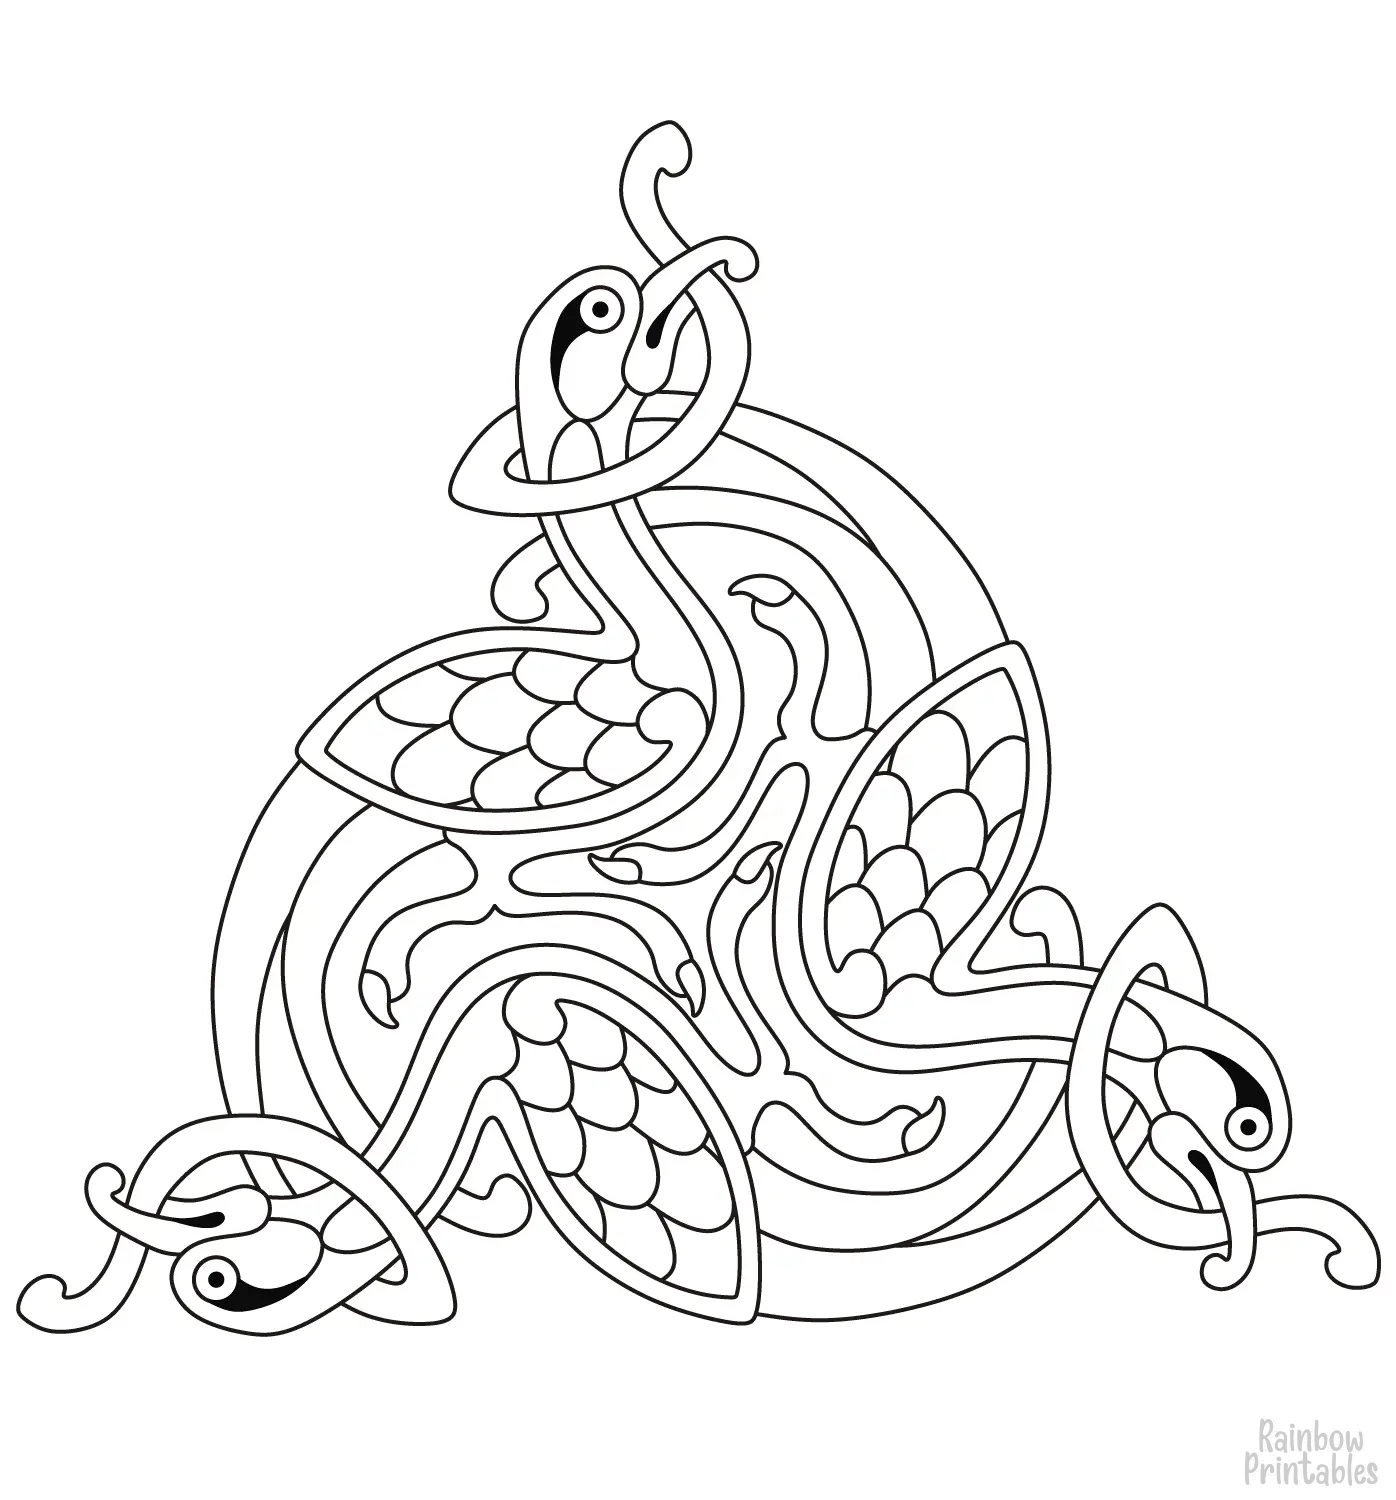 Celtic DESIGN Pattern Mandala Coloring Pages for Kids Adults Art Activities Line Art